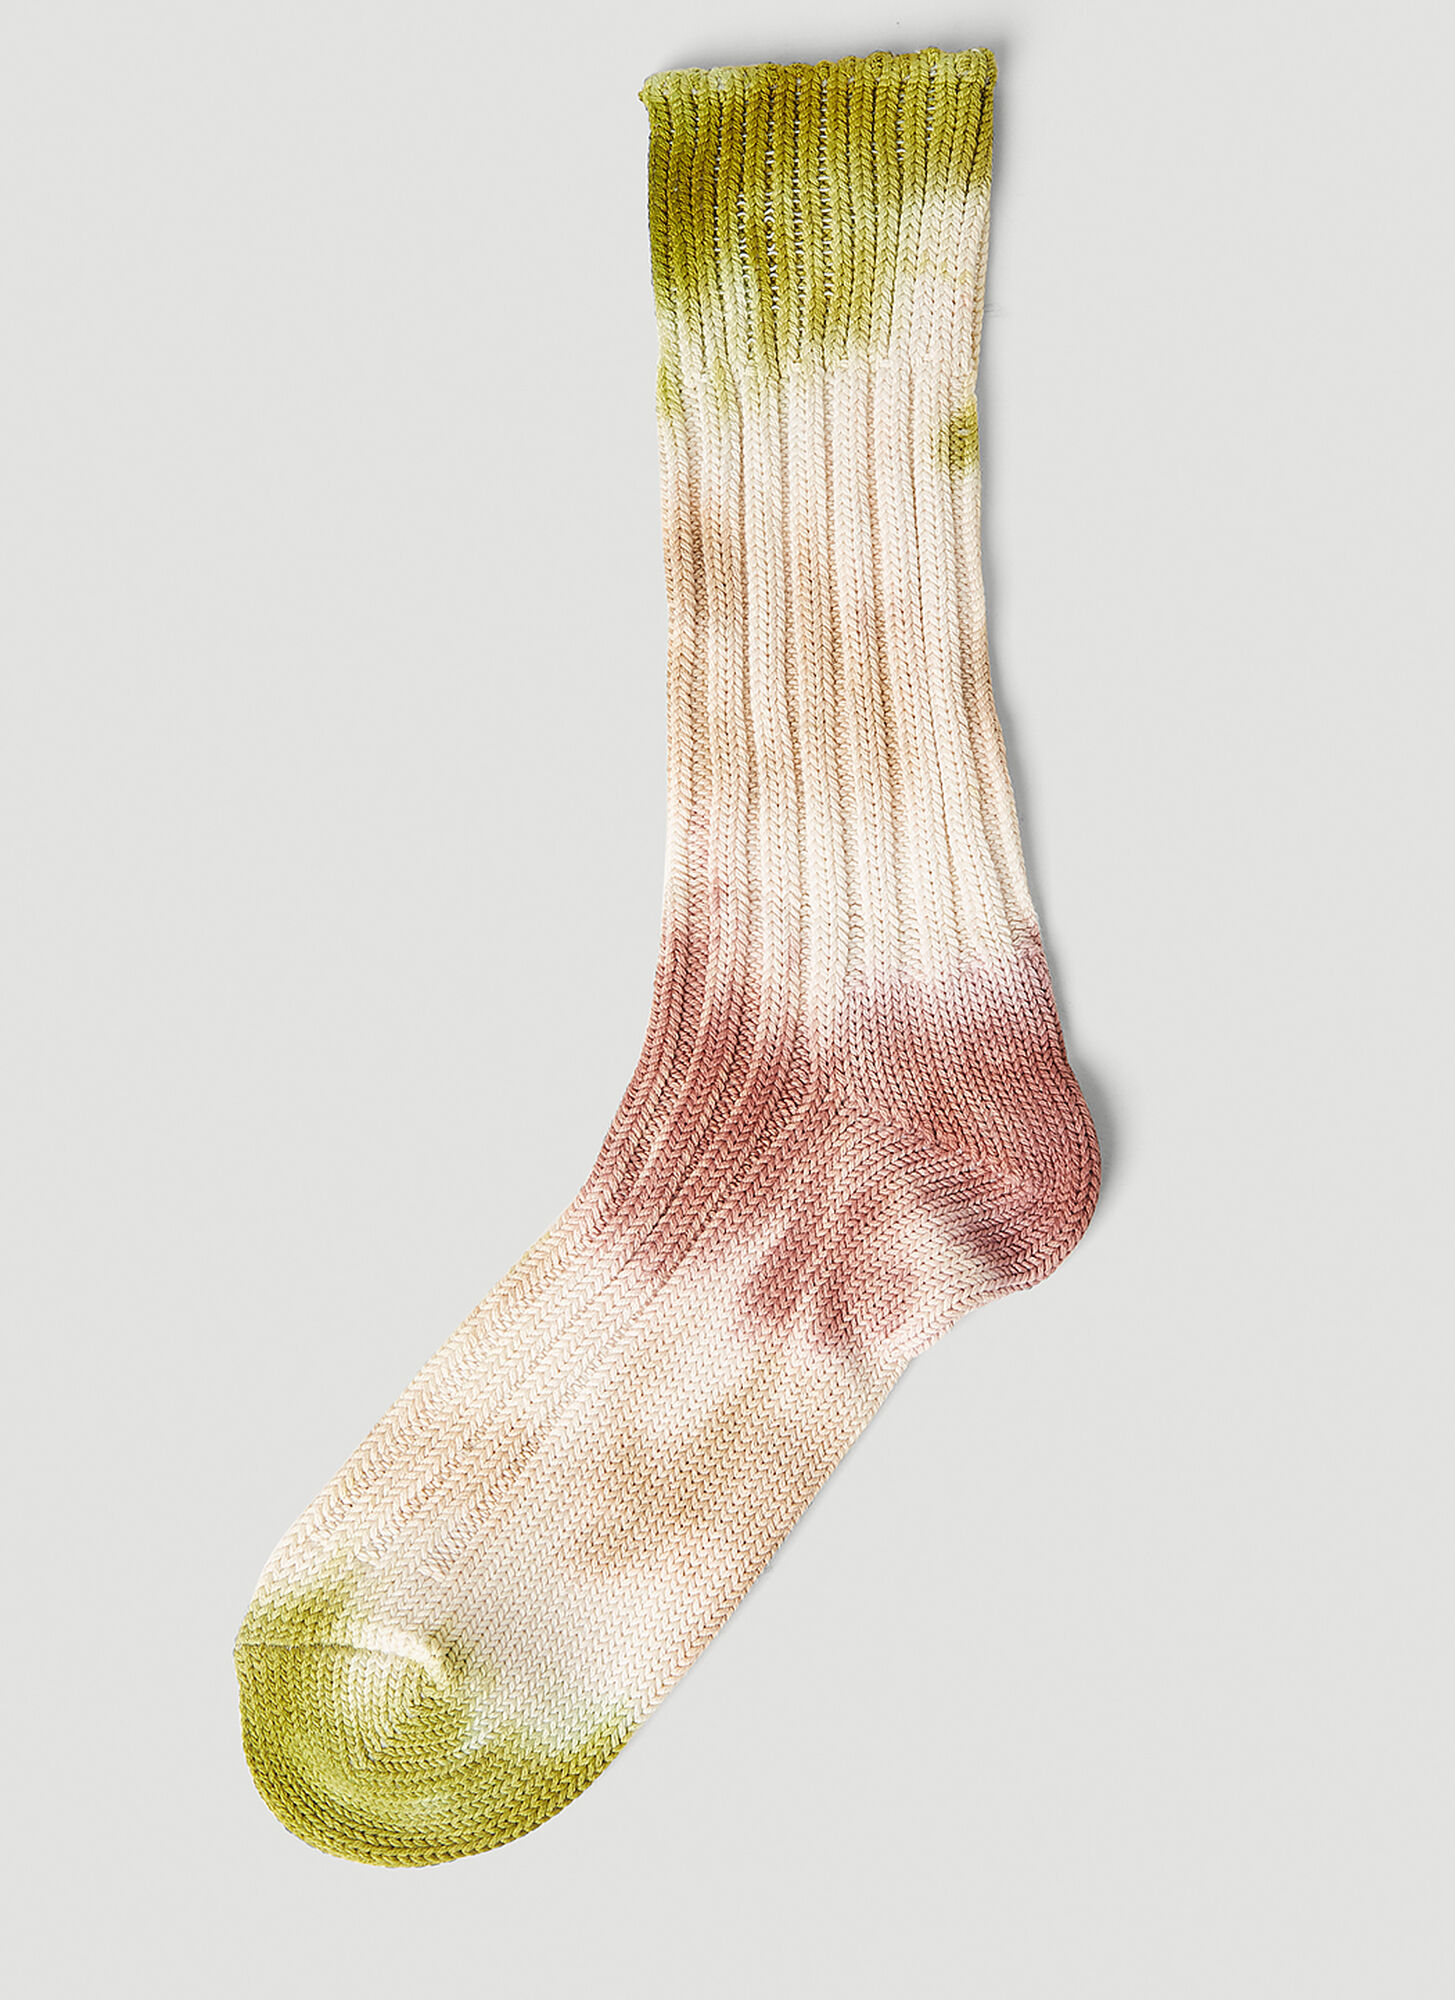 Stain Shade X Decka Socks Tie Dye Socks Unisex Beige